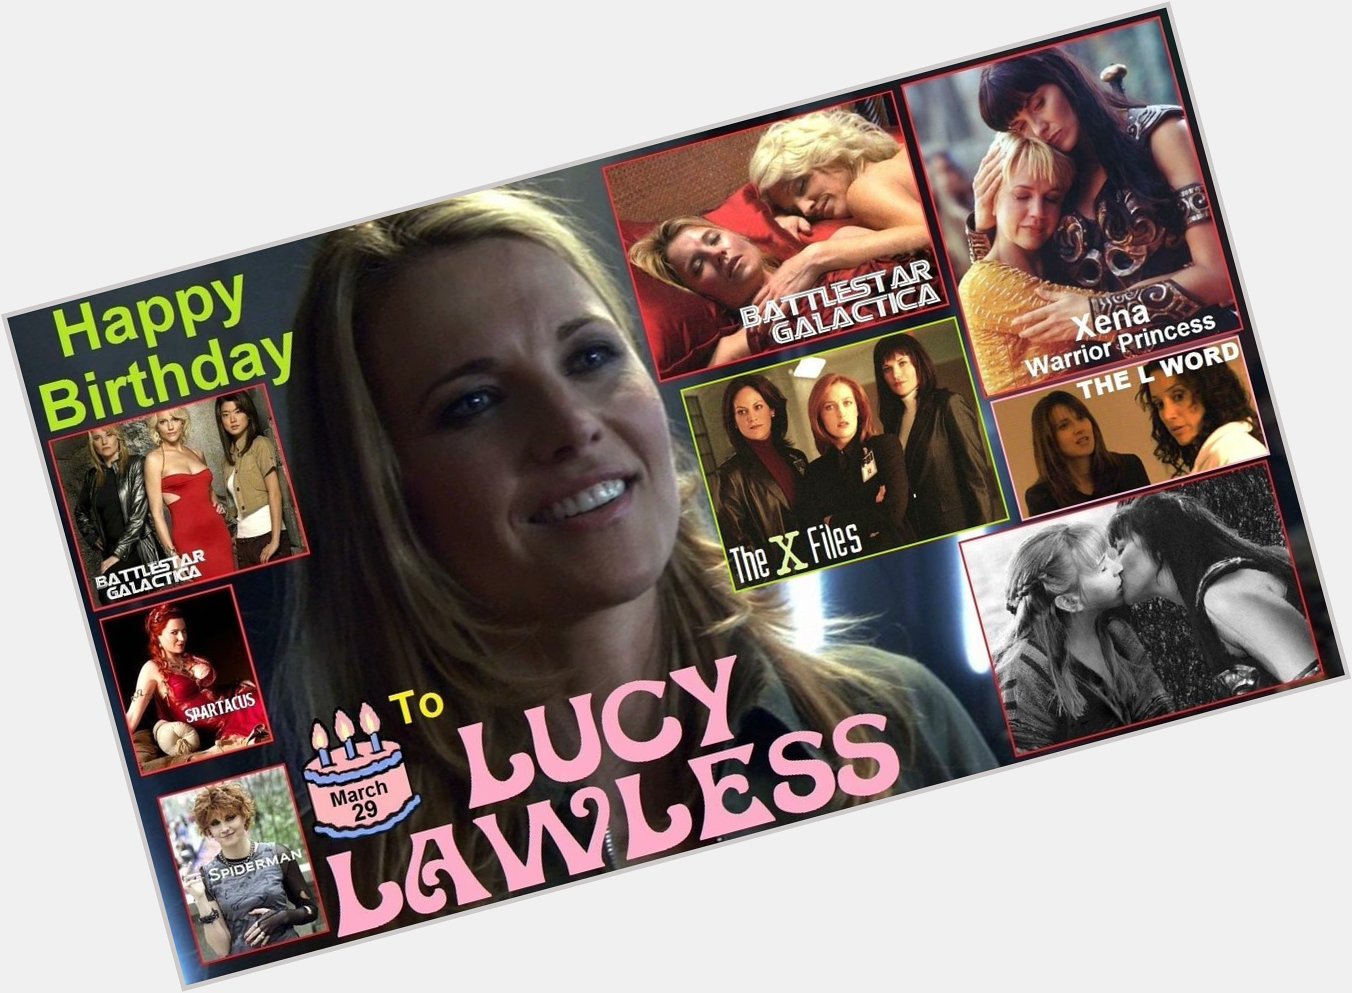 Happy Birthday Lucy Lawless

HappyBirthdayLucy 